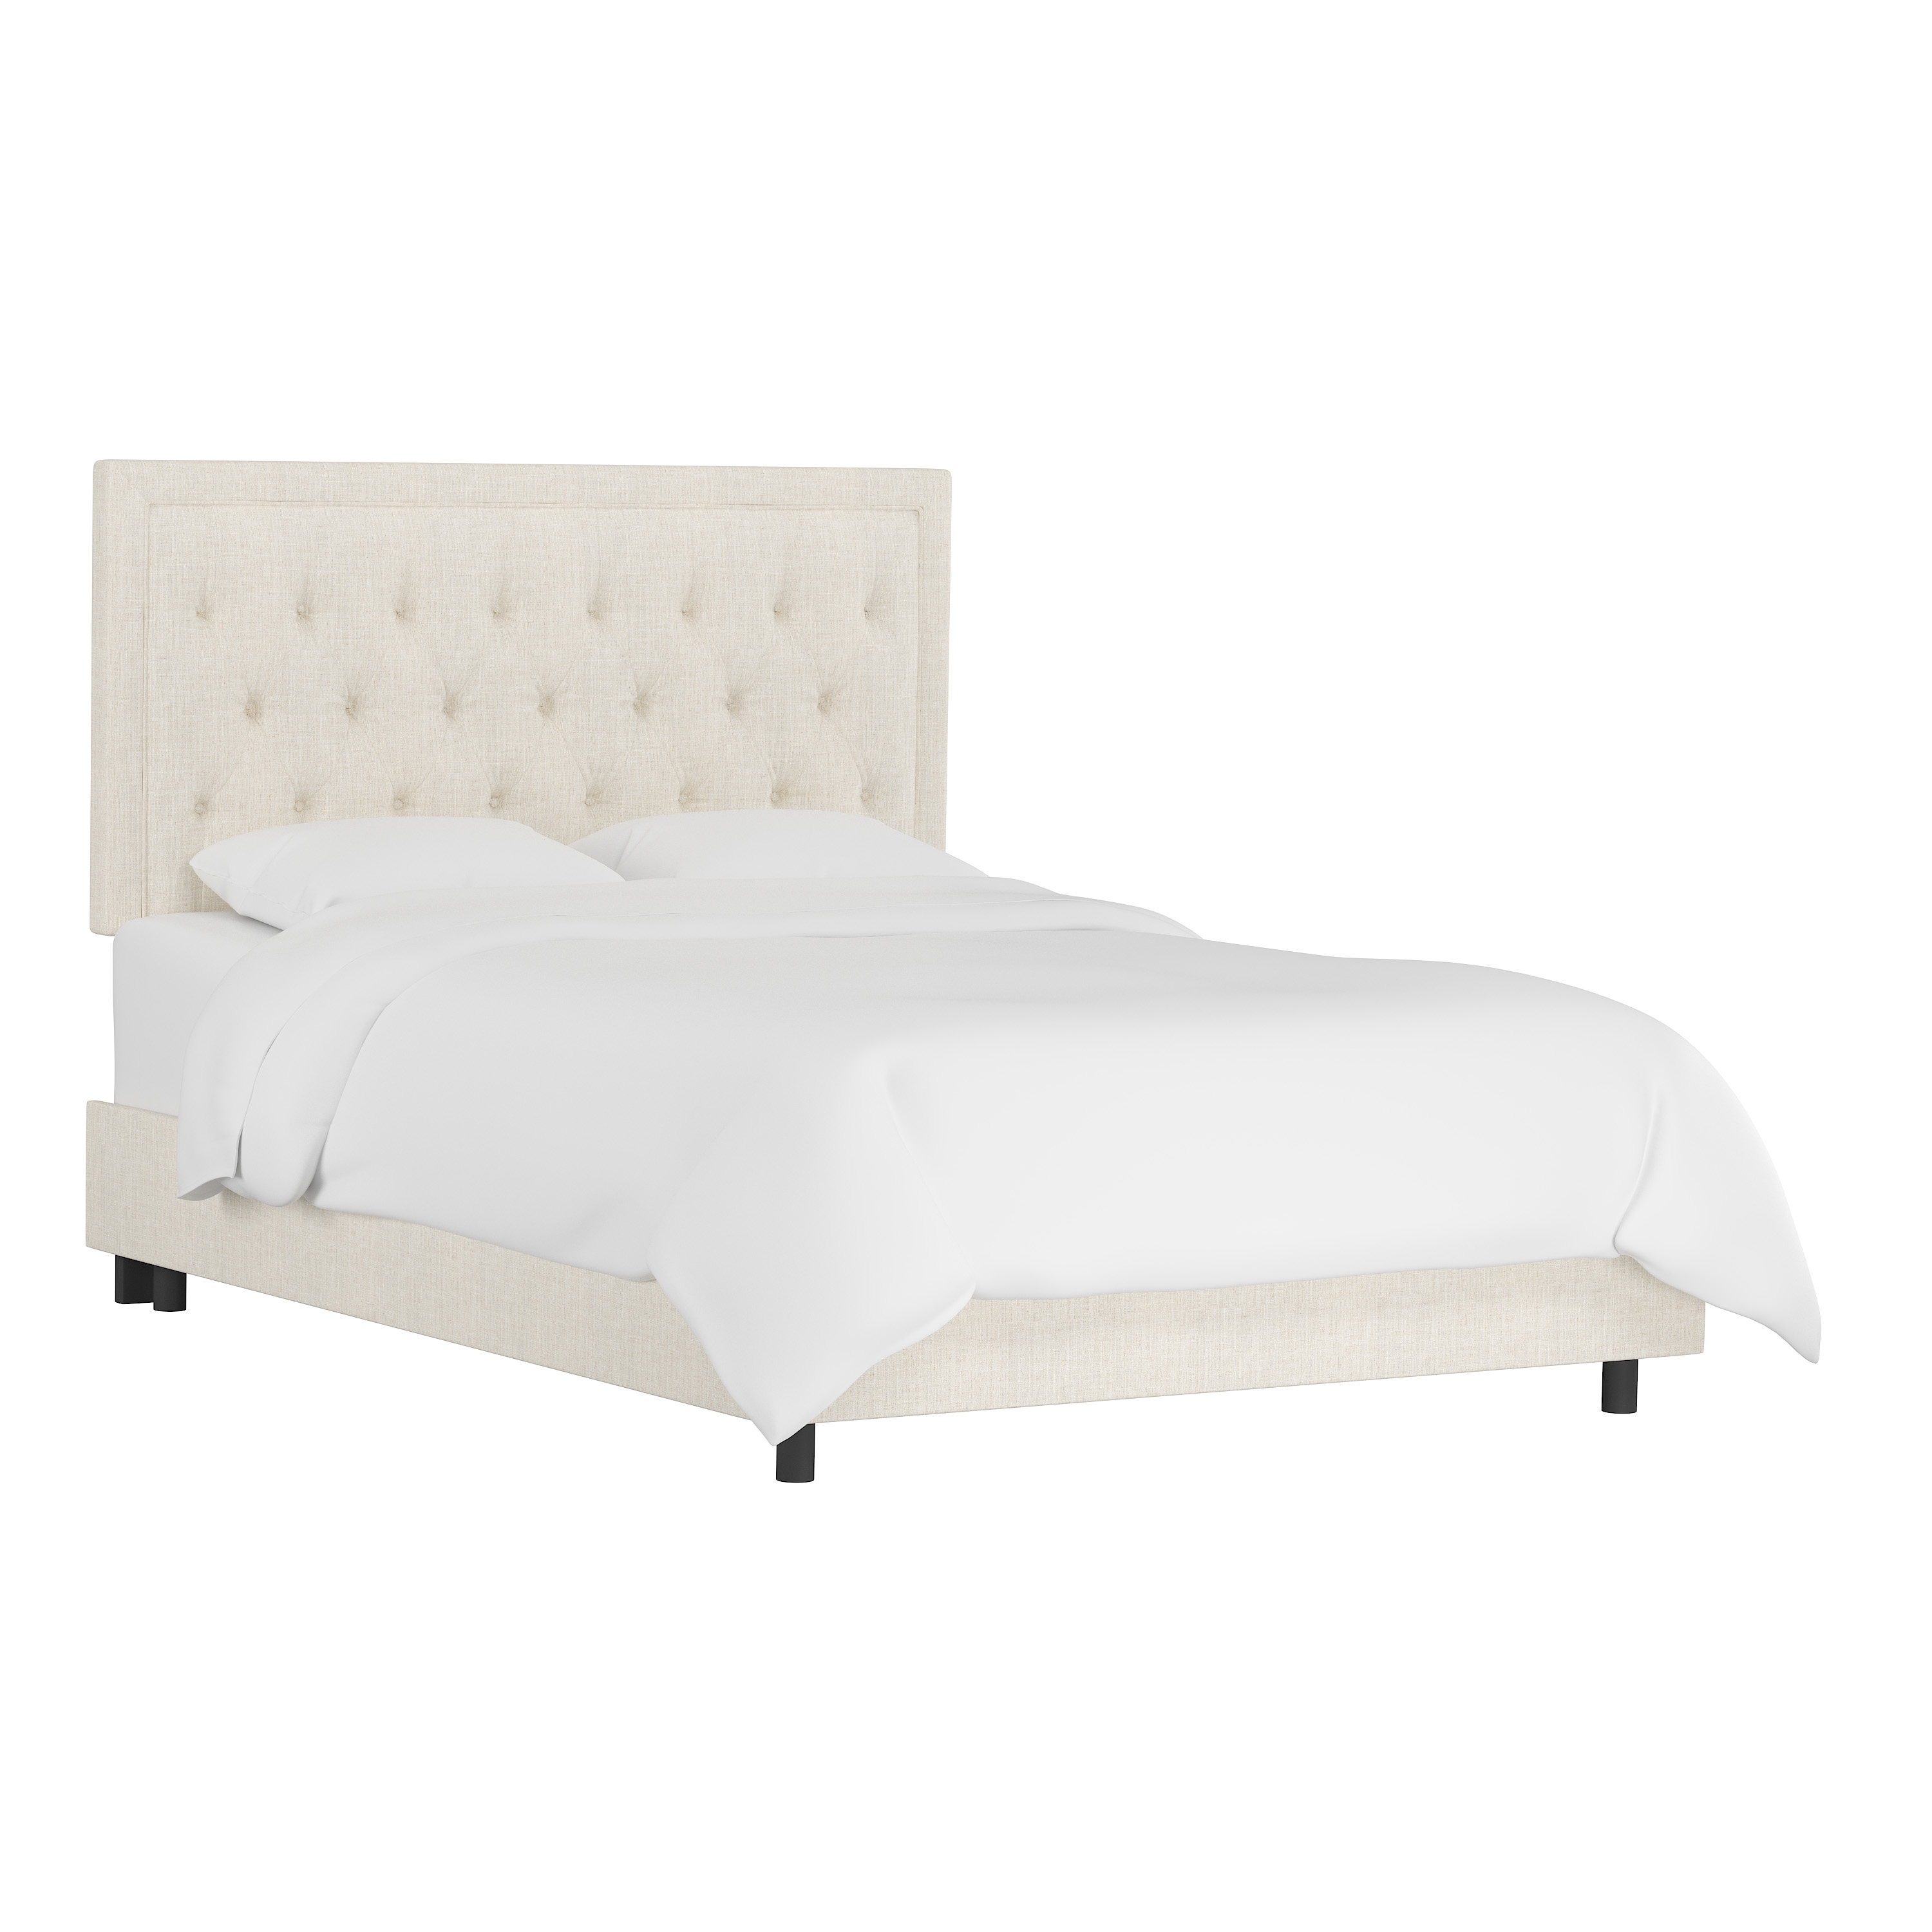 Lafayette Bed, Queen, Talc - Image 0